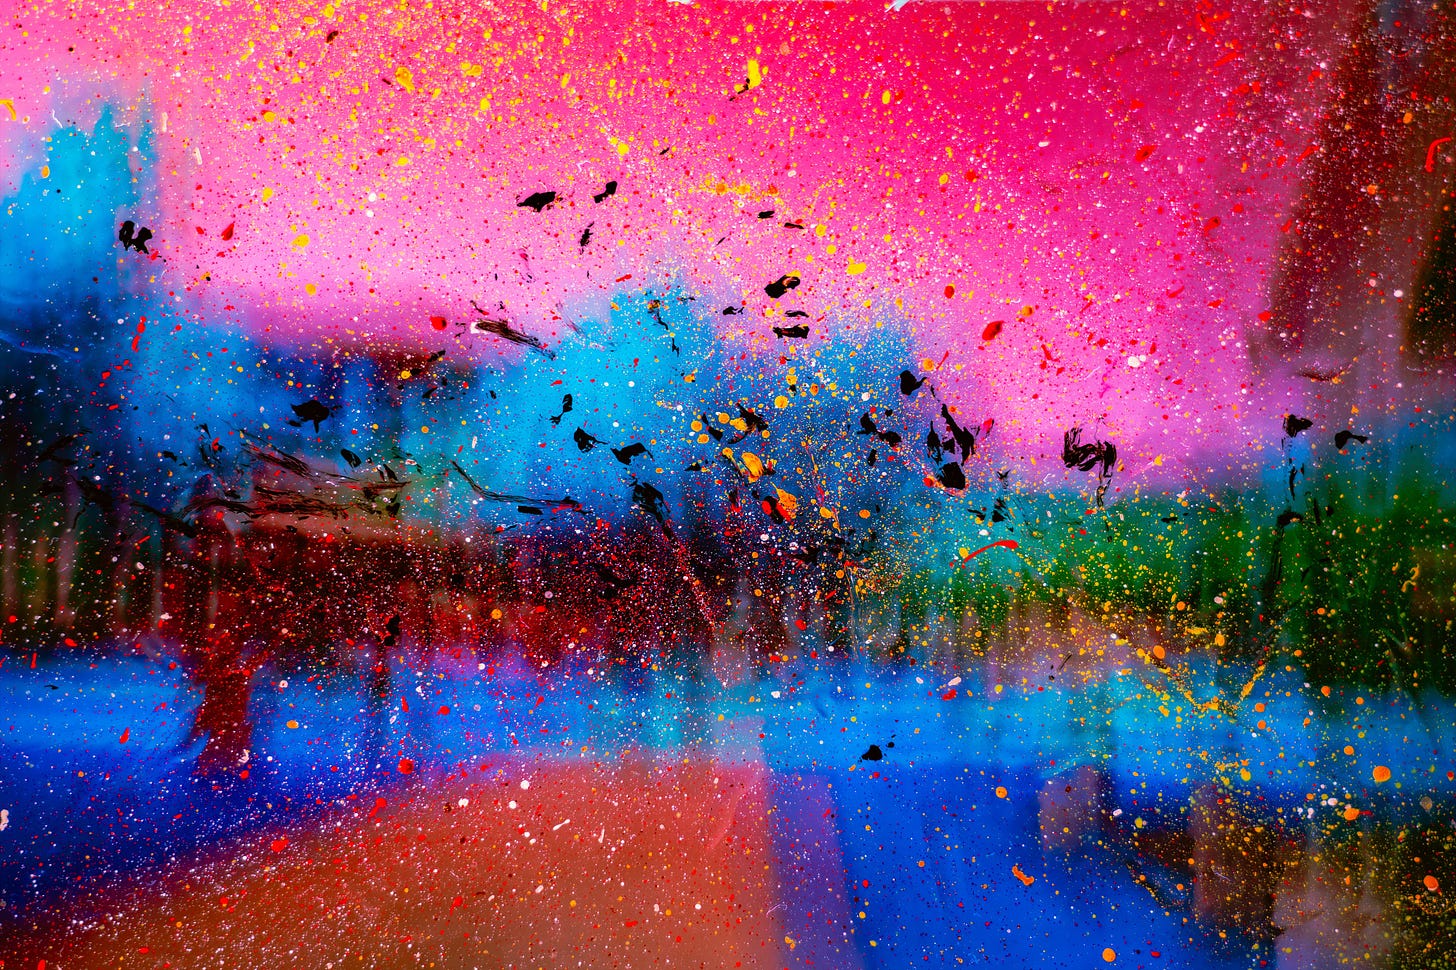 Magical colourful splashes to symbolise creativity when living wih chronic illness